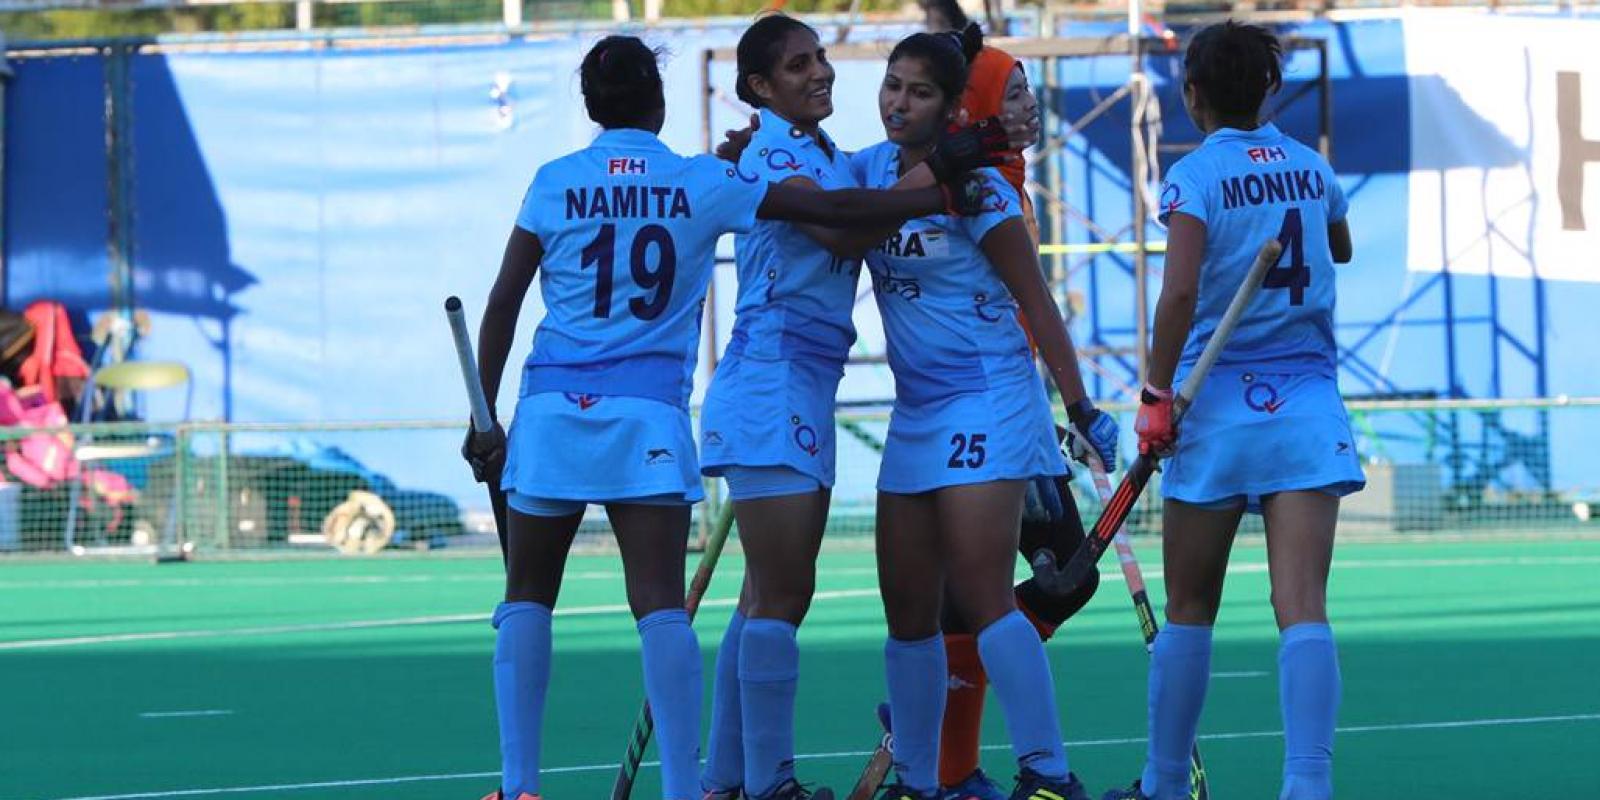 Indian women's hockey team